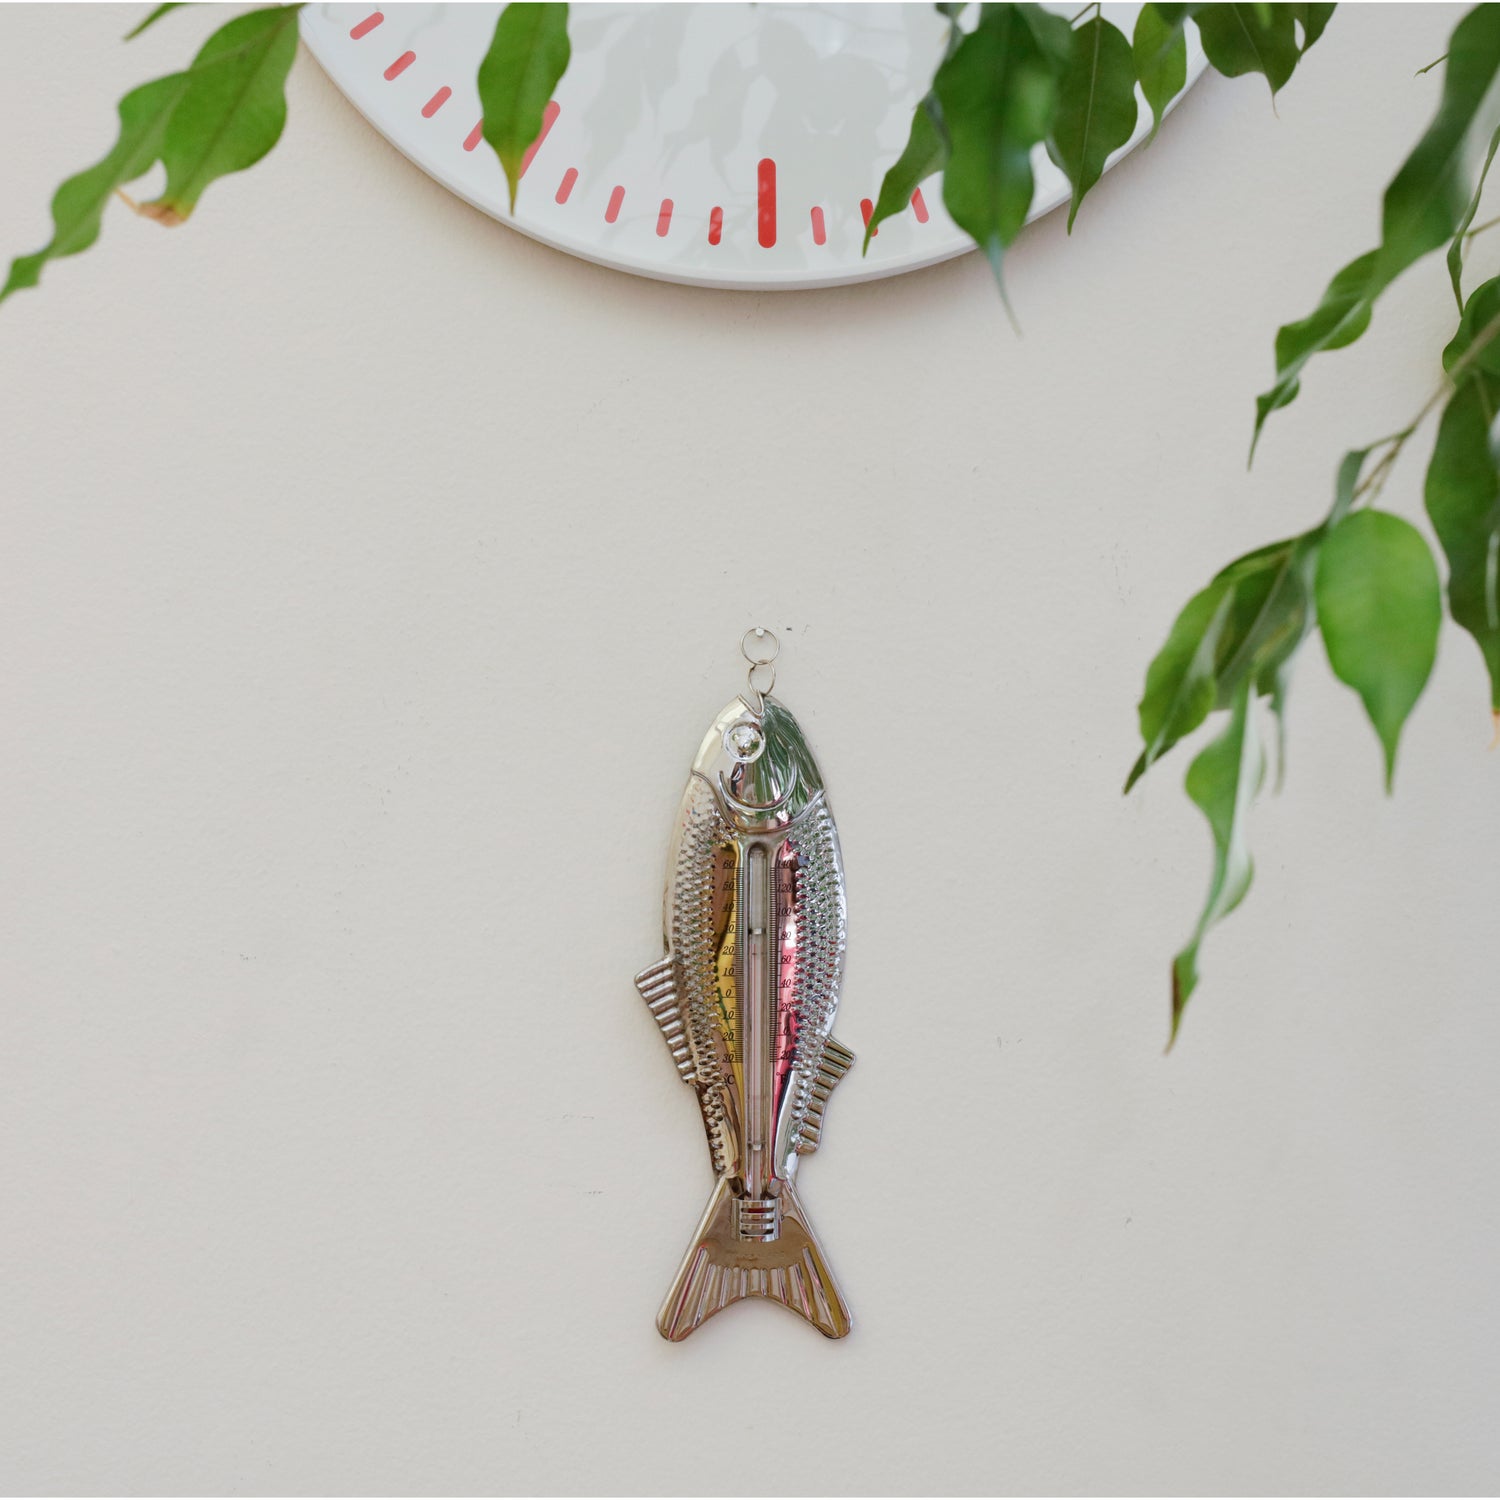 Fishing water thermometer, depth gauge - CG Emery